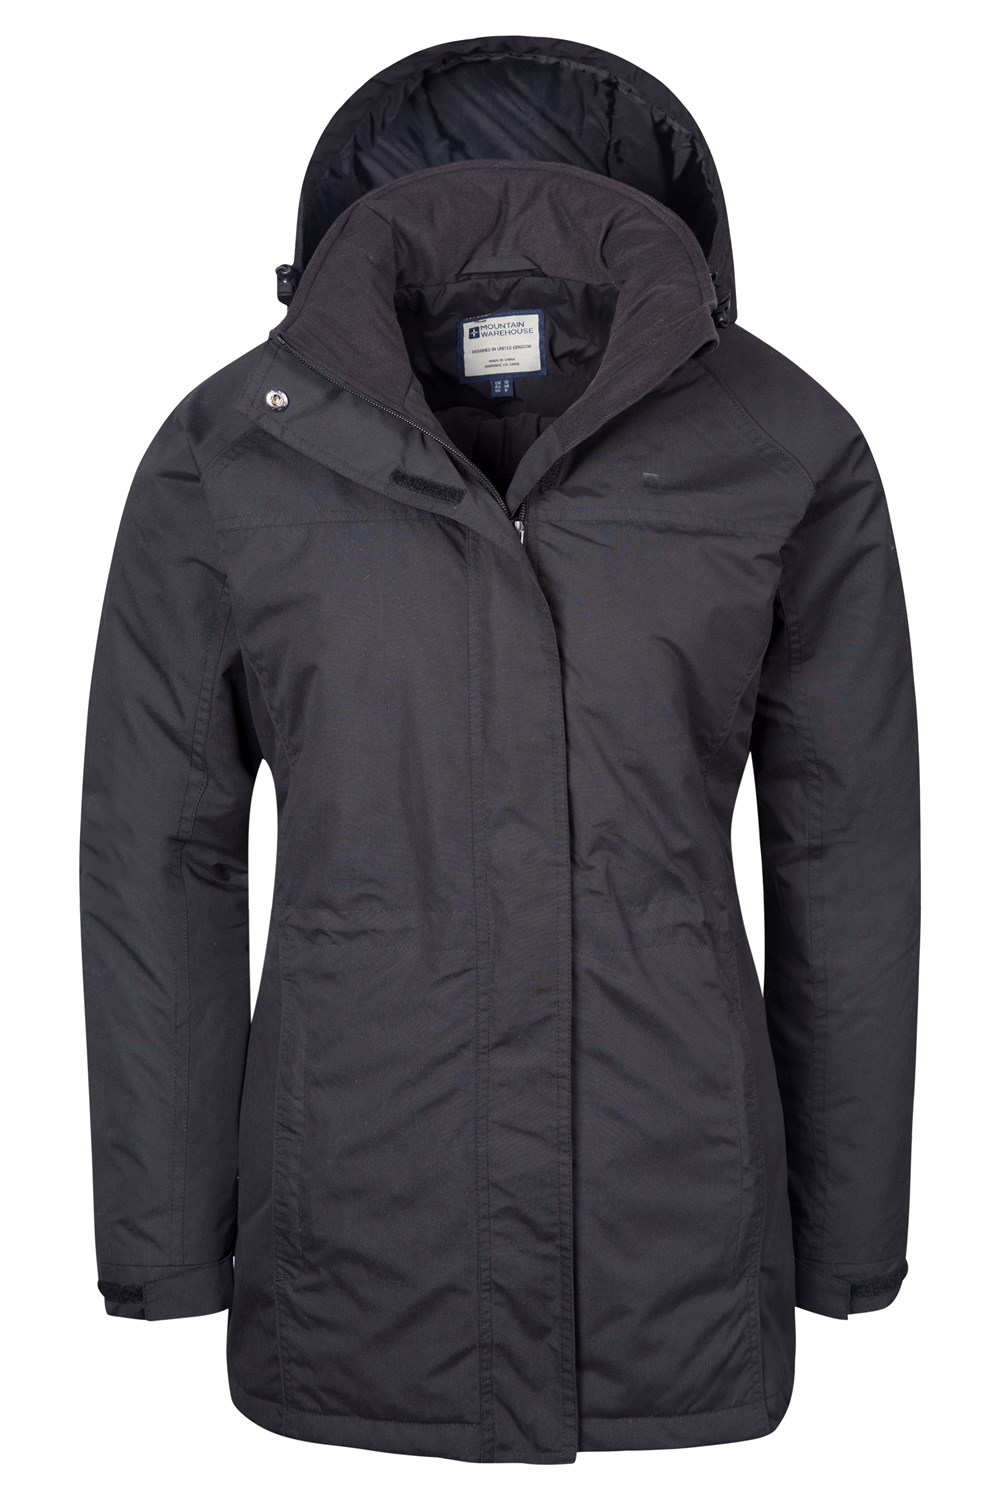 Mountain Warehouse Westport Womens Winter Long Jacket | eBay